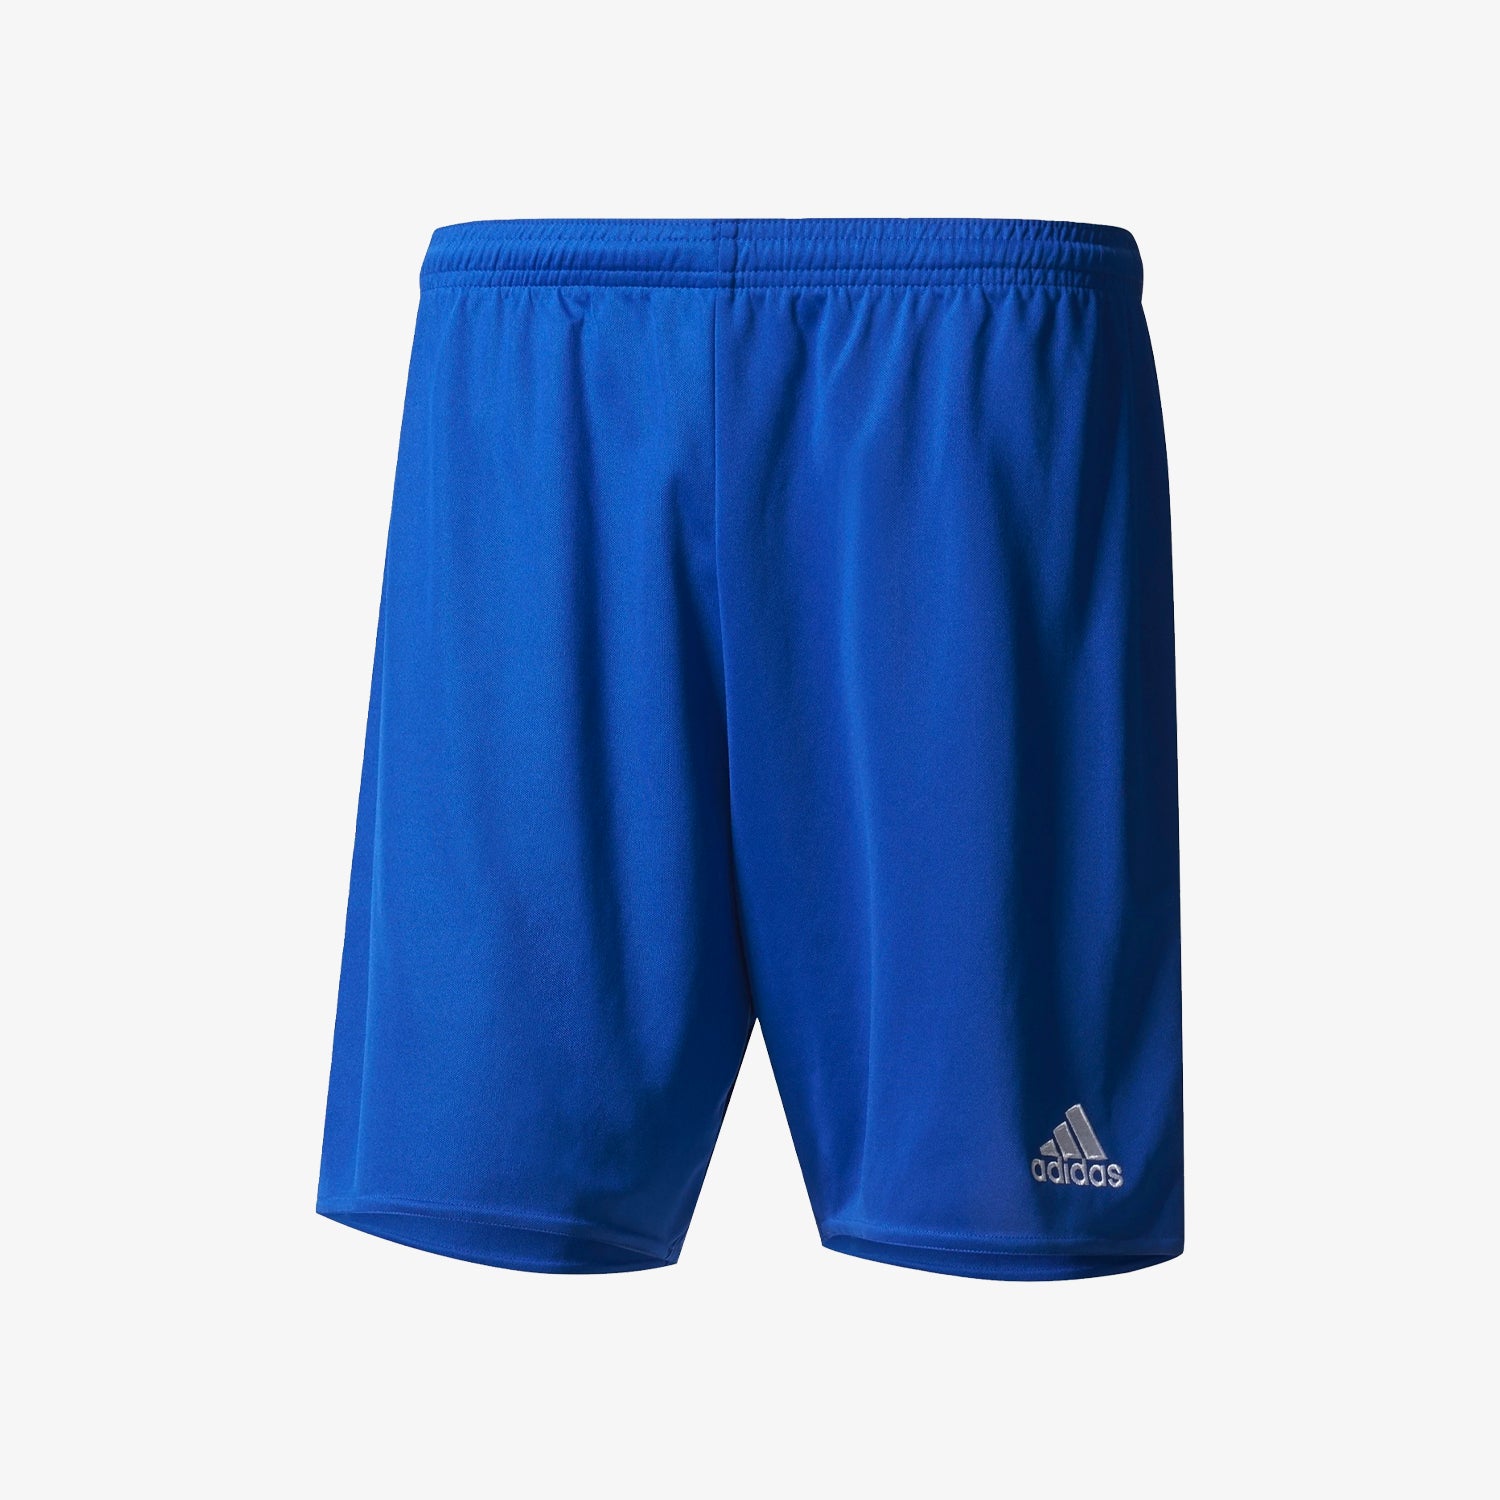 Parma 16 Shorts - Blue/White